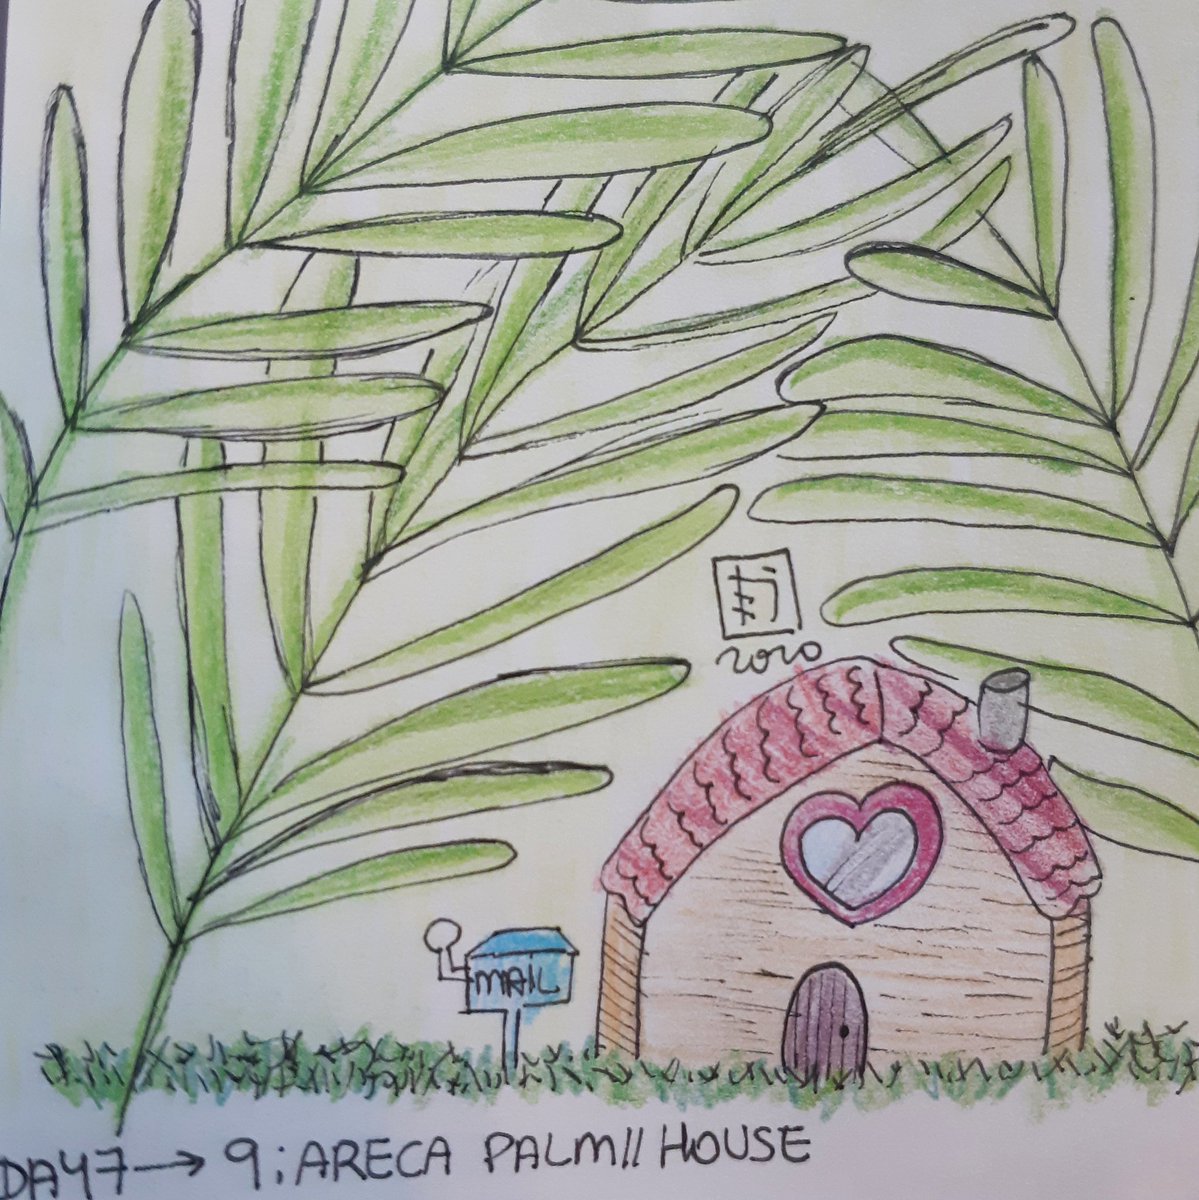 #Slowtember Day 7→9

Areca Palm/House

#slowtember2020 #drawing #dailyart #tradicionalart #desenho #nanquim #colorpencil #arecapalm #house